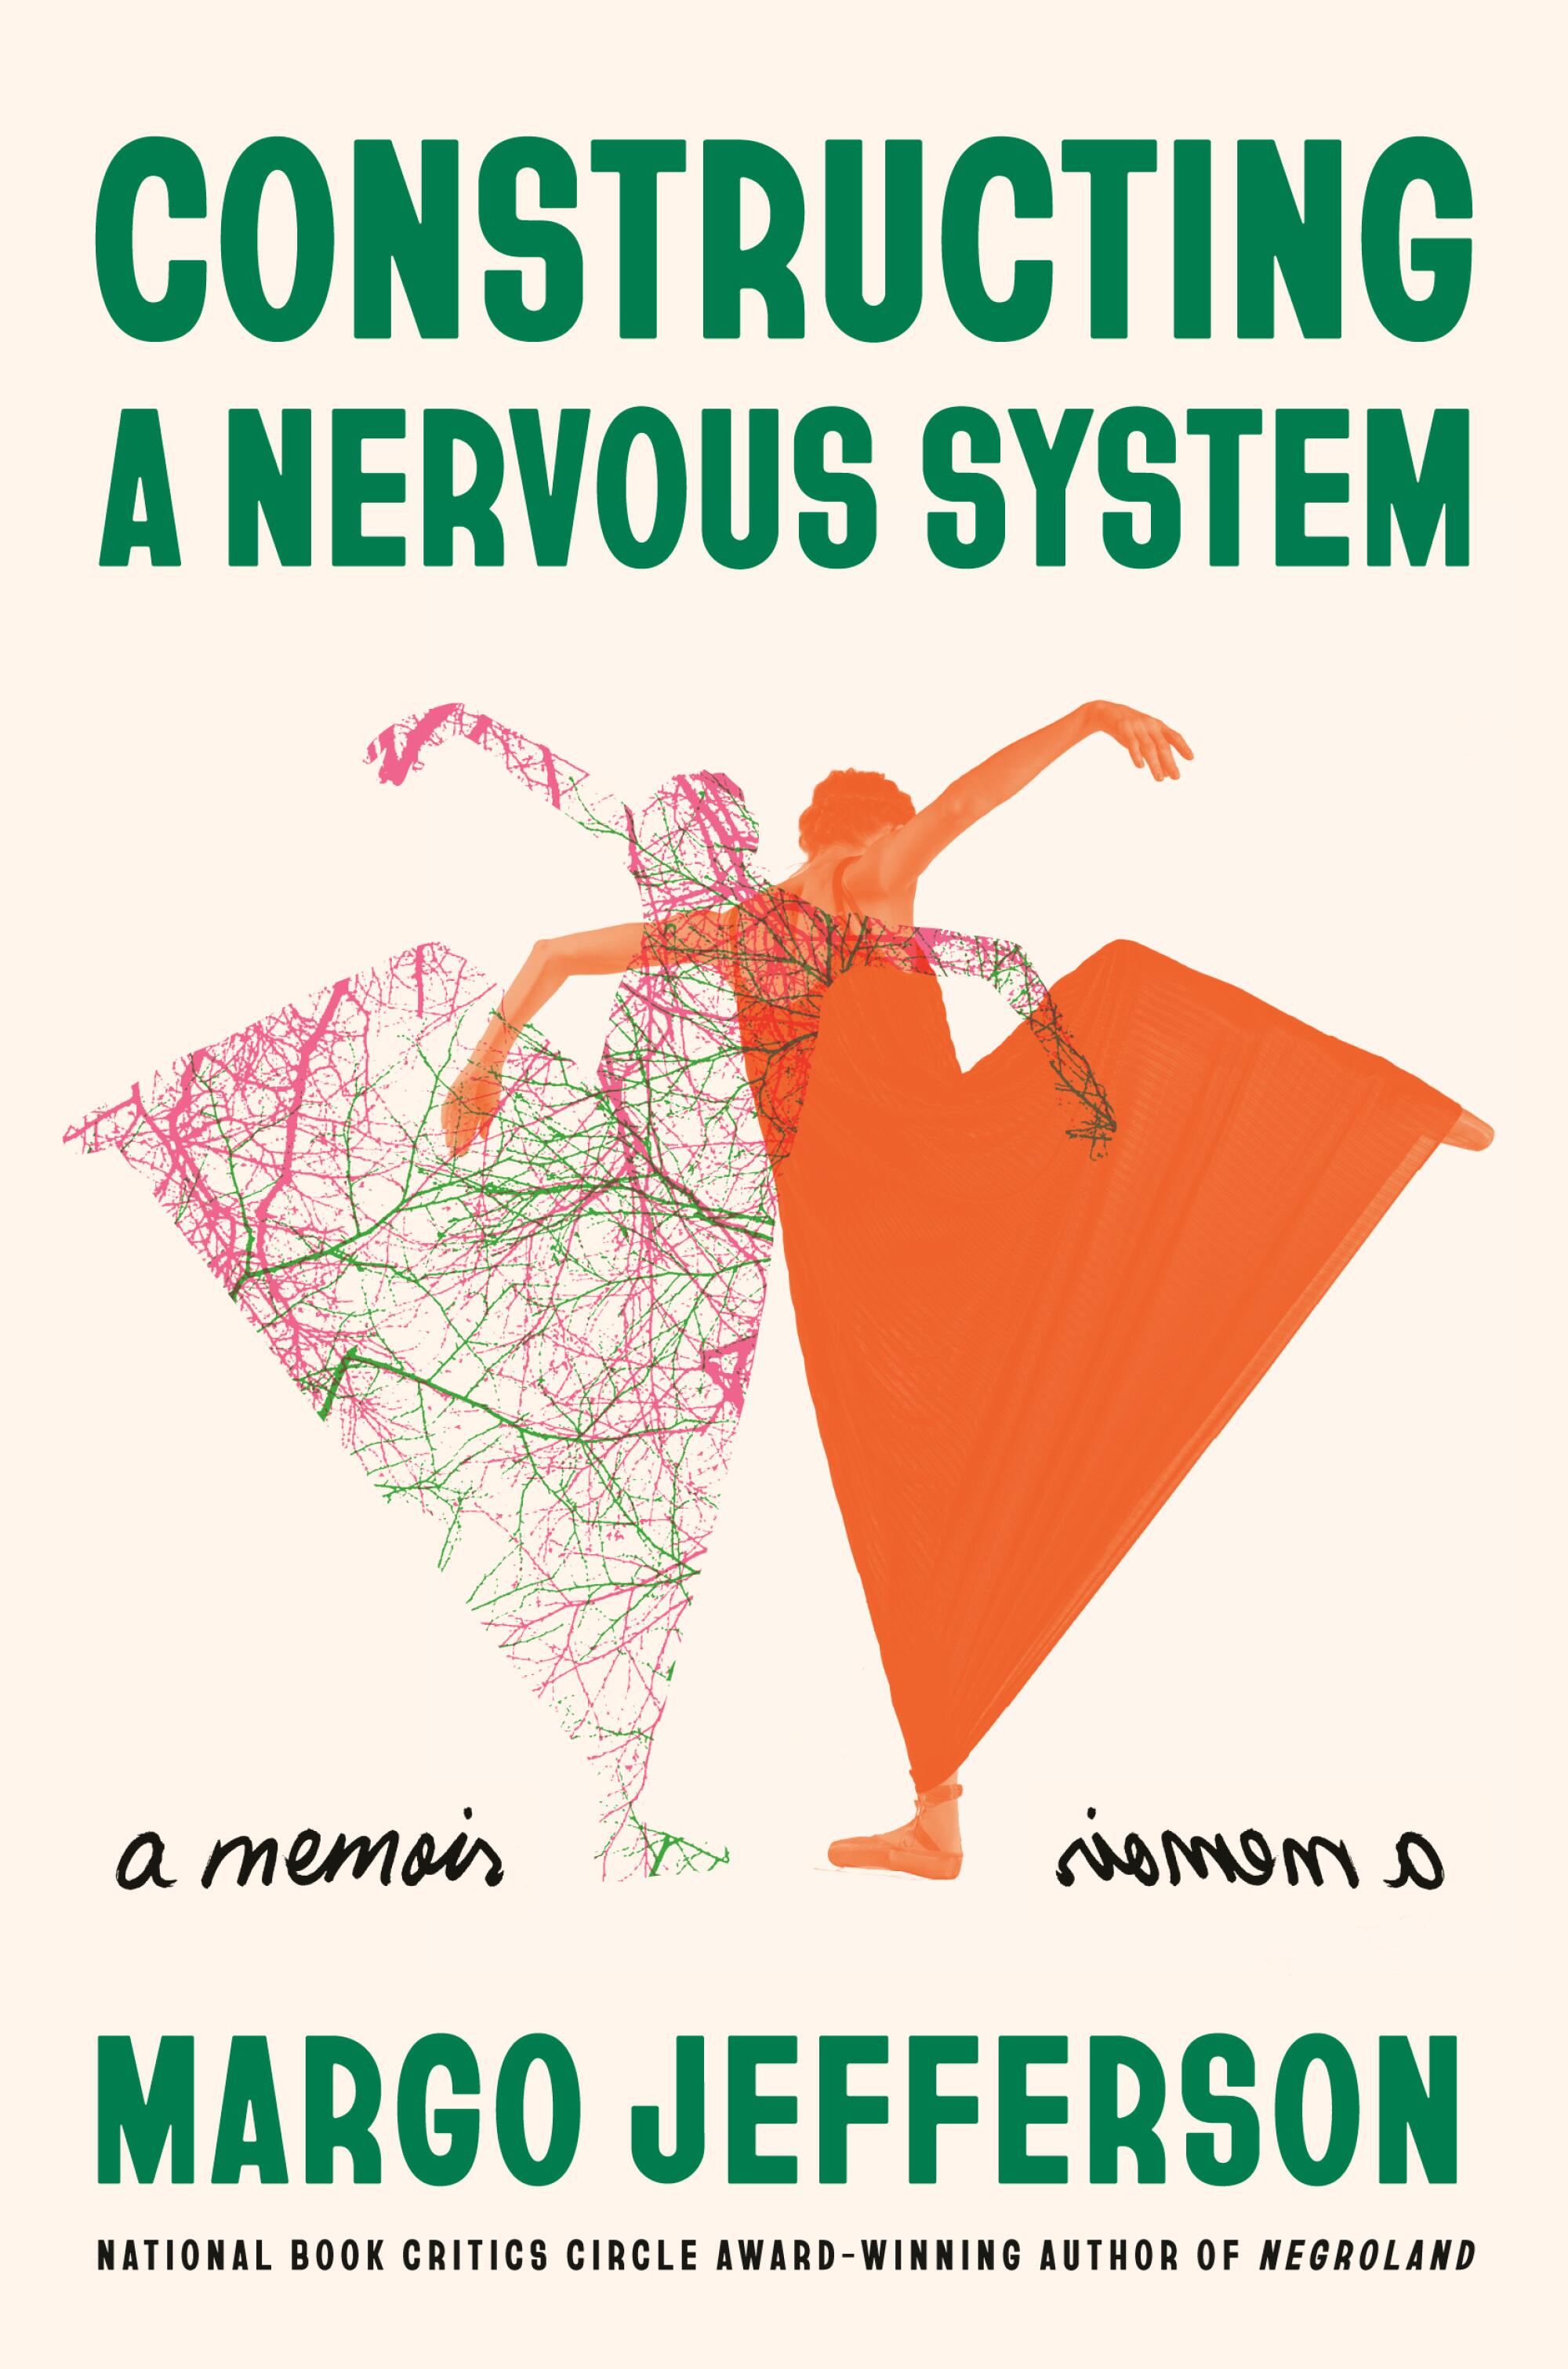 "Constructing a Nervous System: A Memoir" by Margo Jefferson